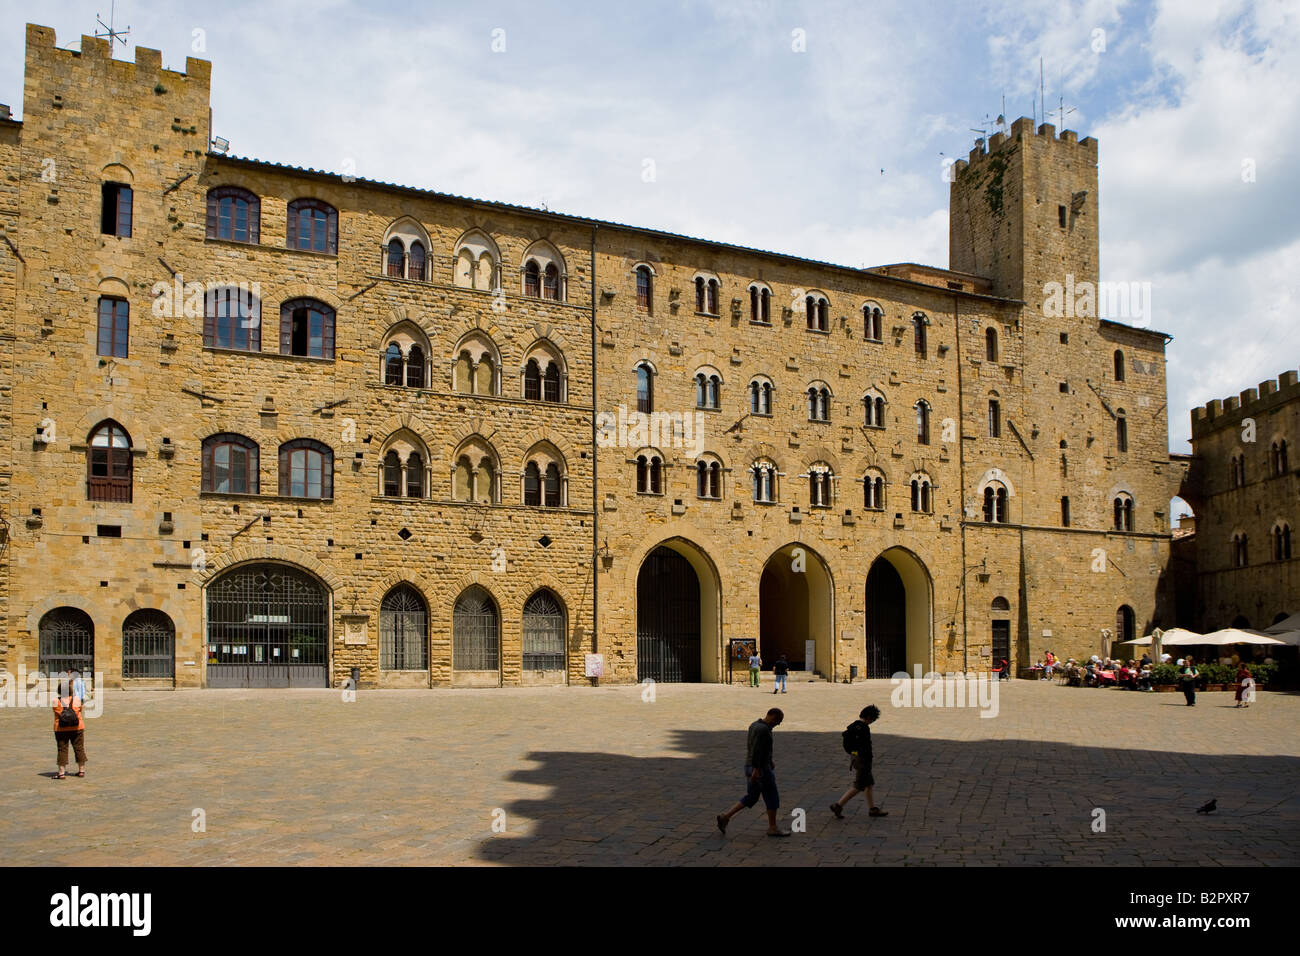 The town hall square with the Palazzo dei Priori Stock Photo